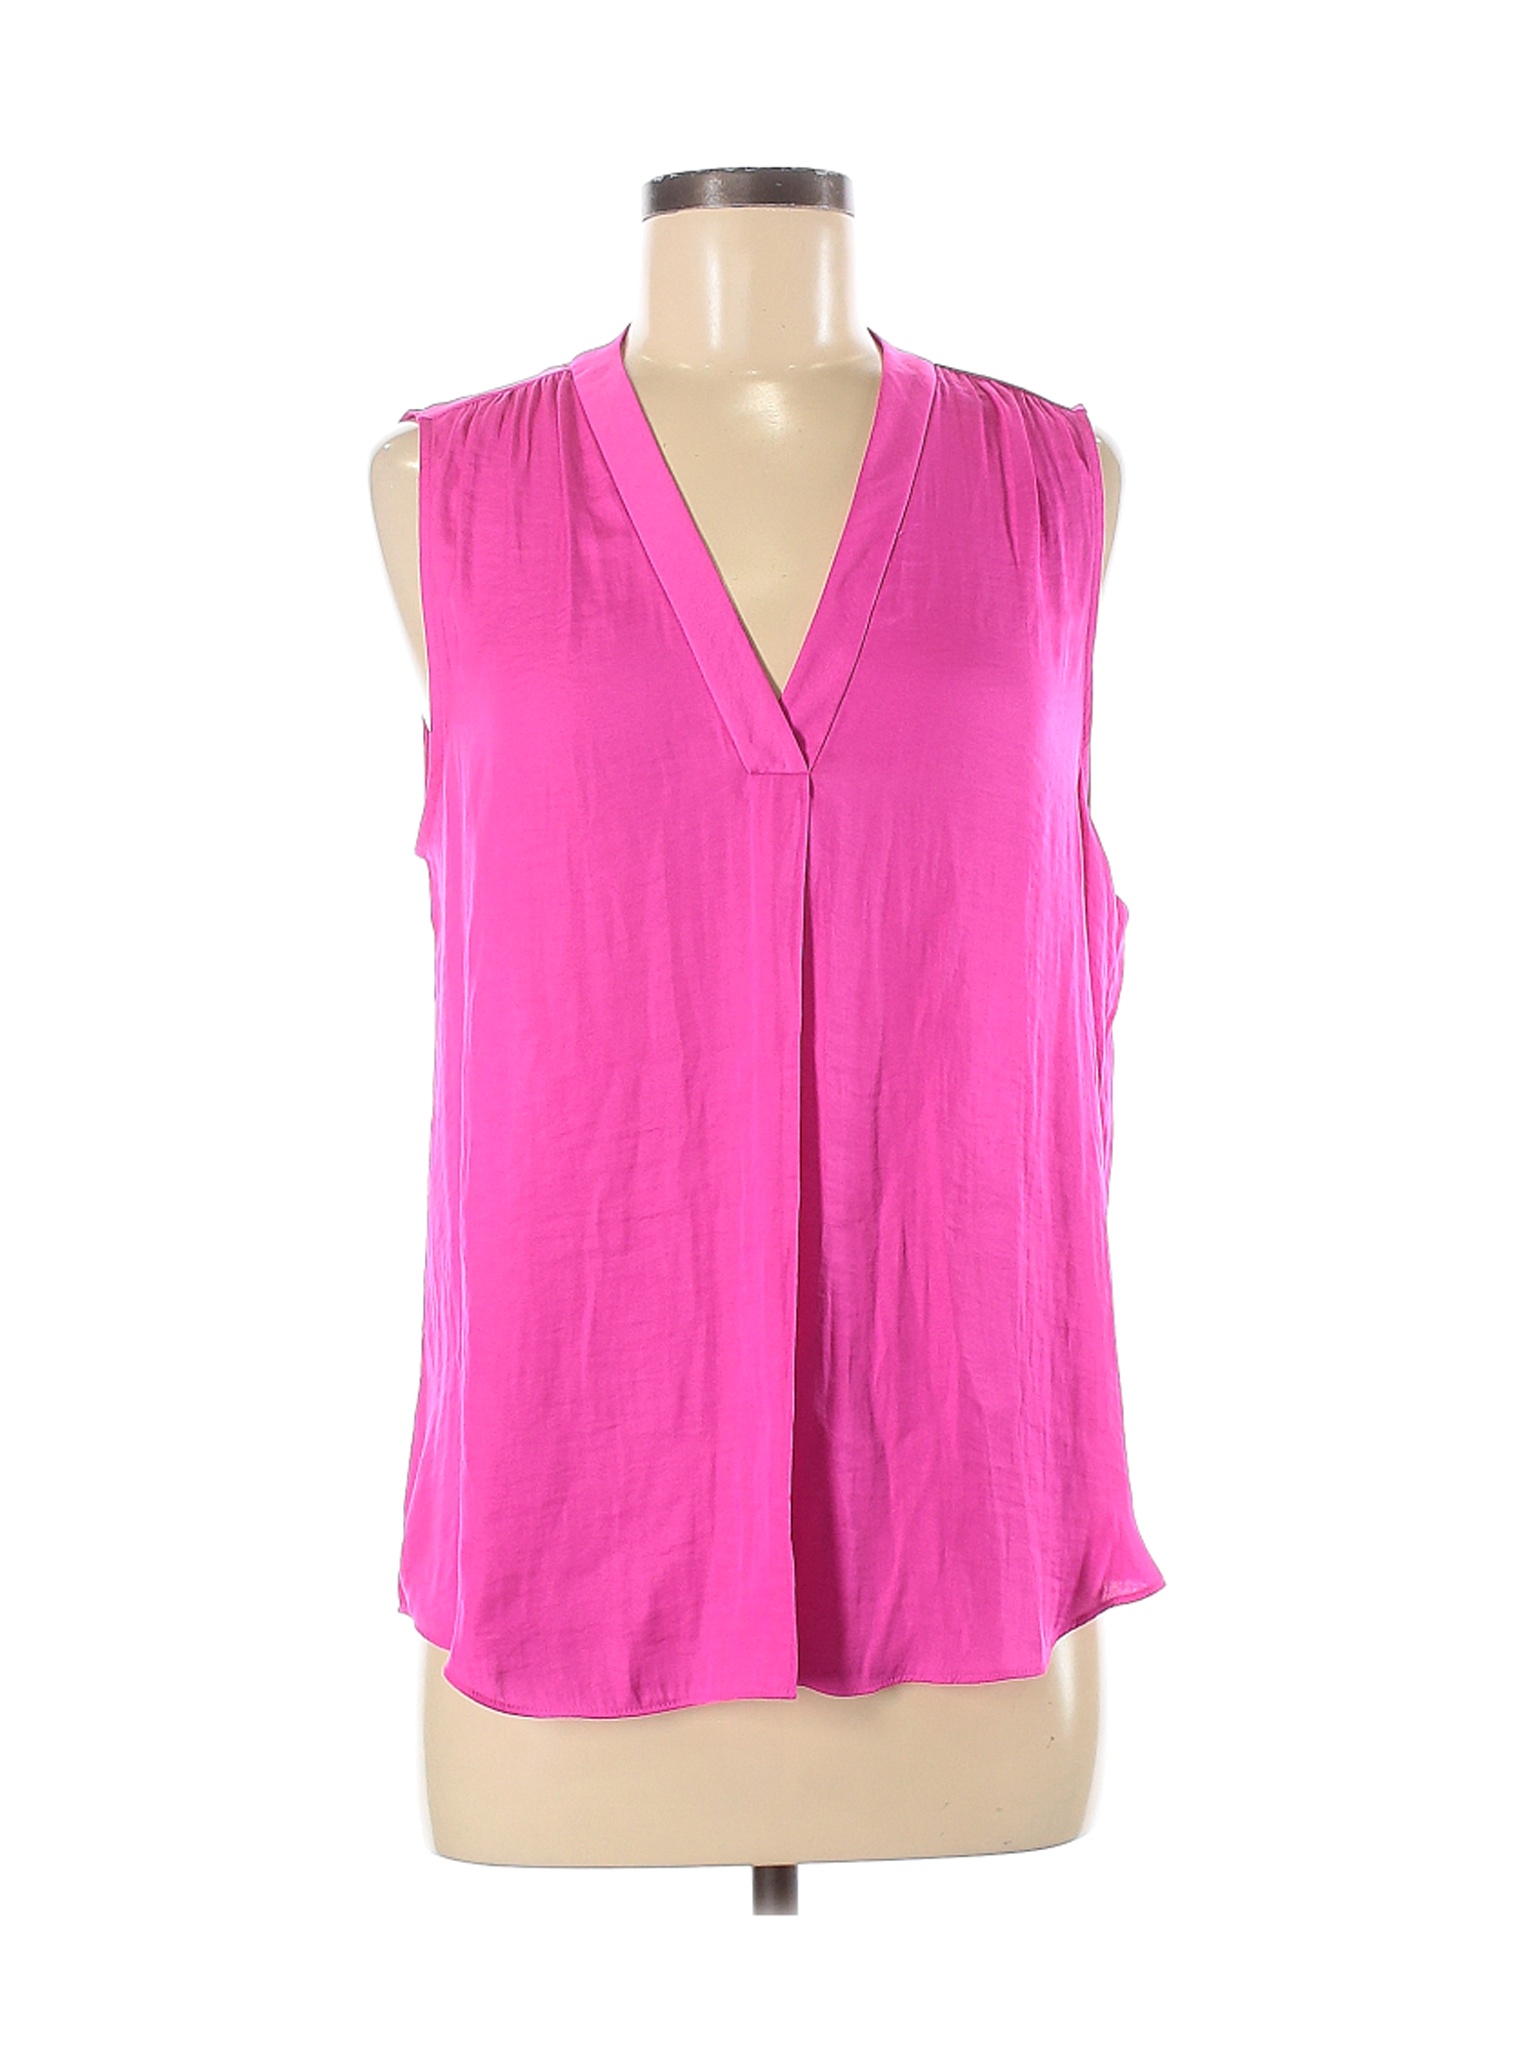 NWT Vince Camuto Women Pink Sleeveless Blouse M | eBay